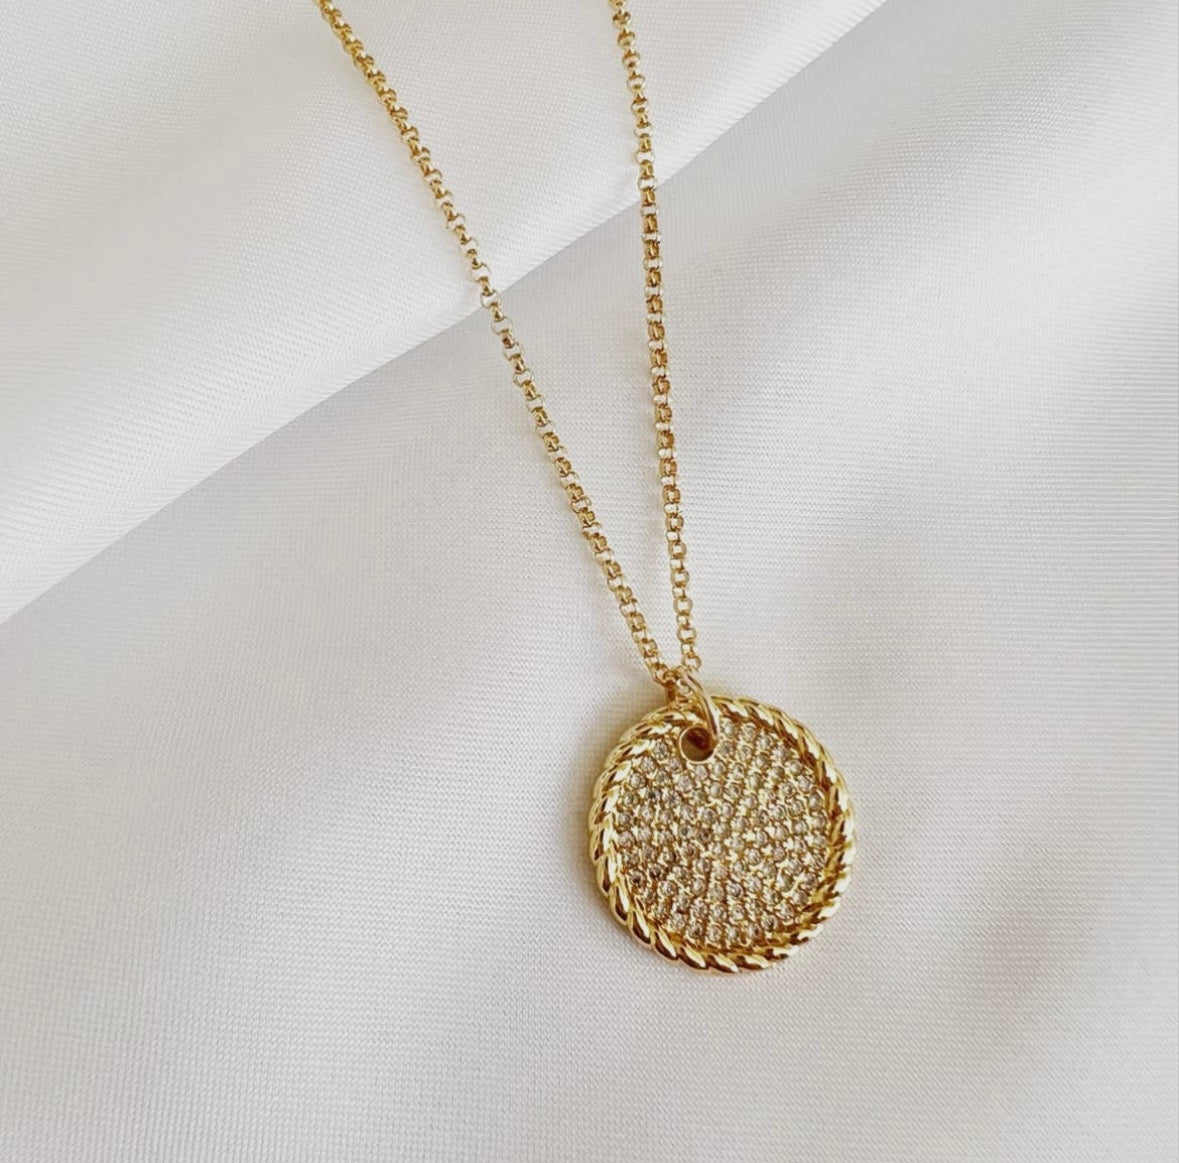 true by kristy jewelry - Old City Pave CZ Pendant Necklace Gold Filled